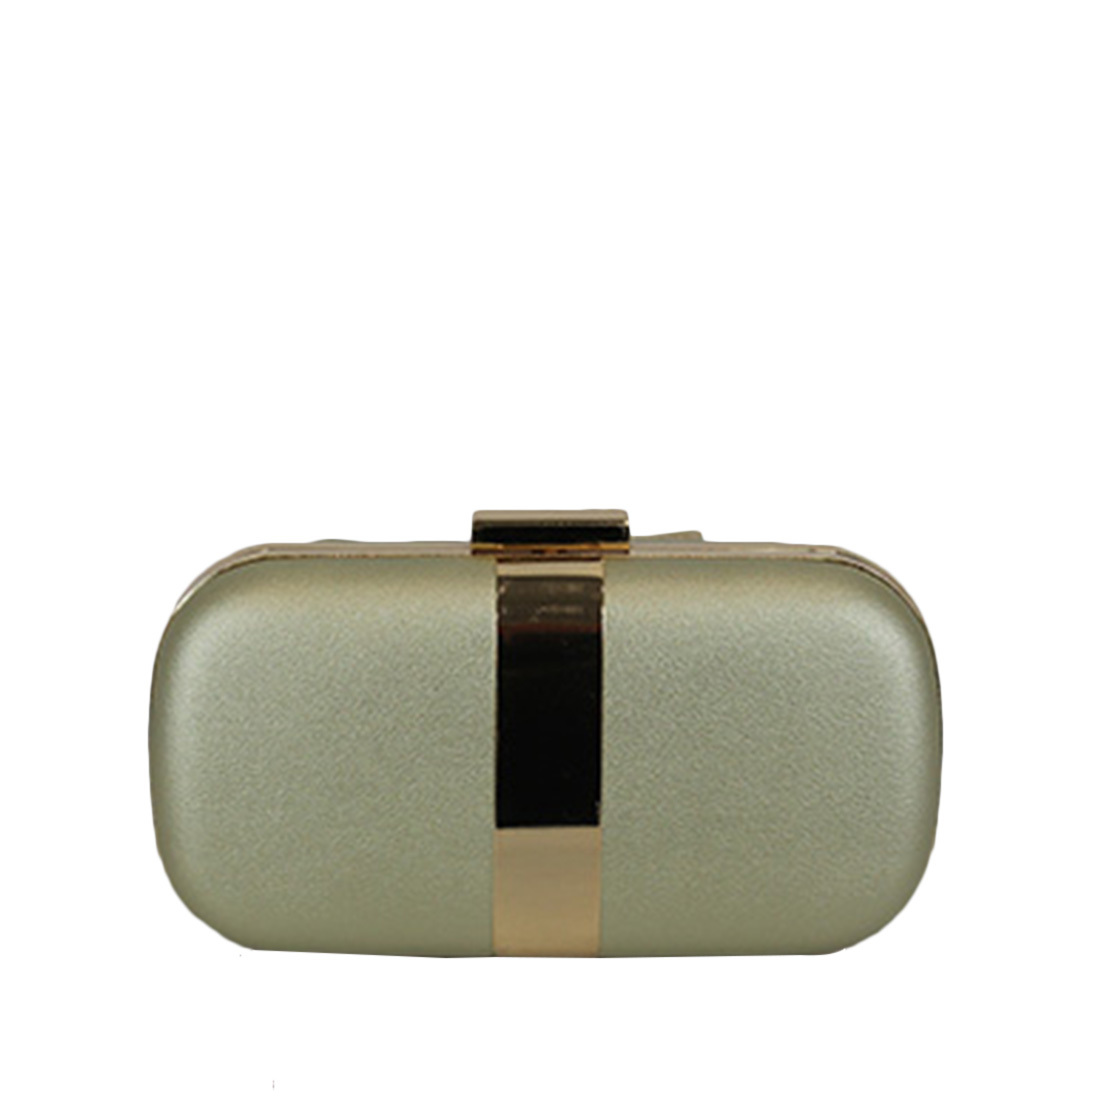 Hard case clutch bag with gold trim